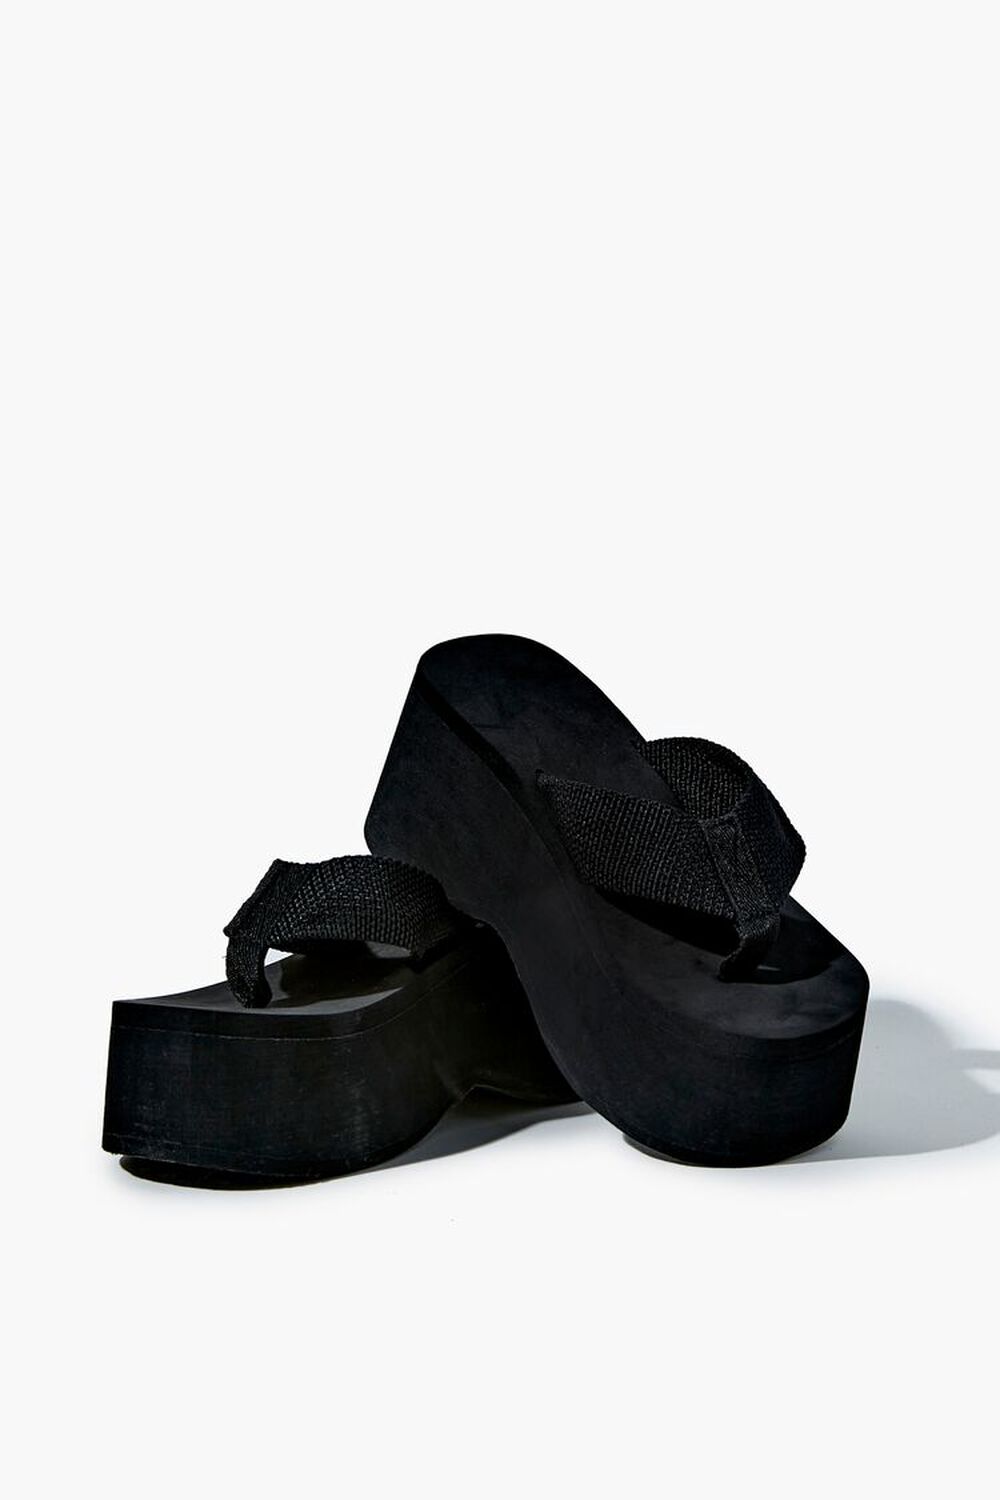 BLACK Flatform Thong Wedges, image 1